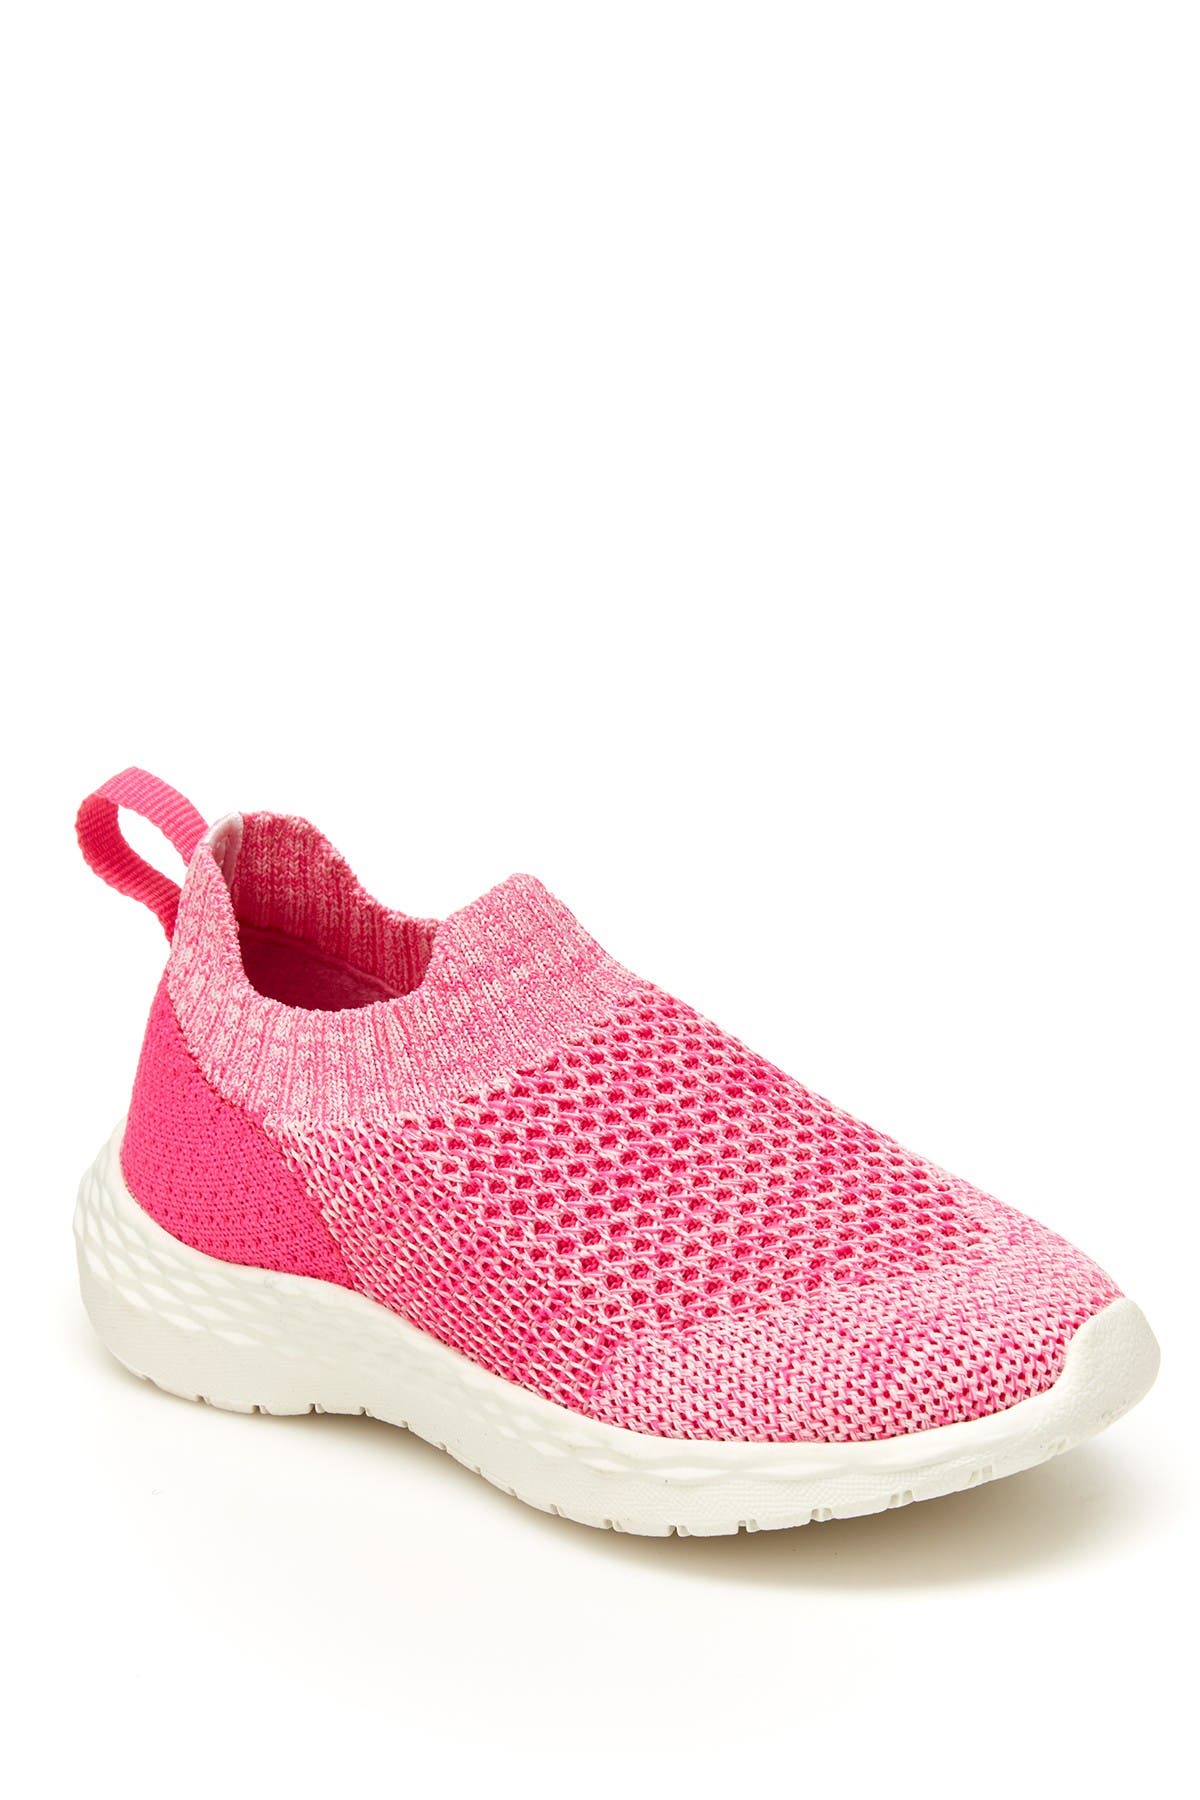 Carter's Kids' Greeny Knit Sneaker In Bright Pink